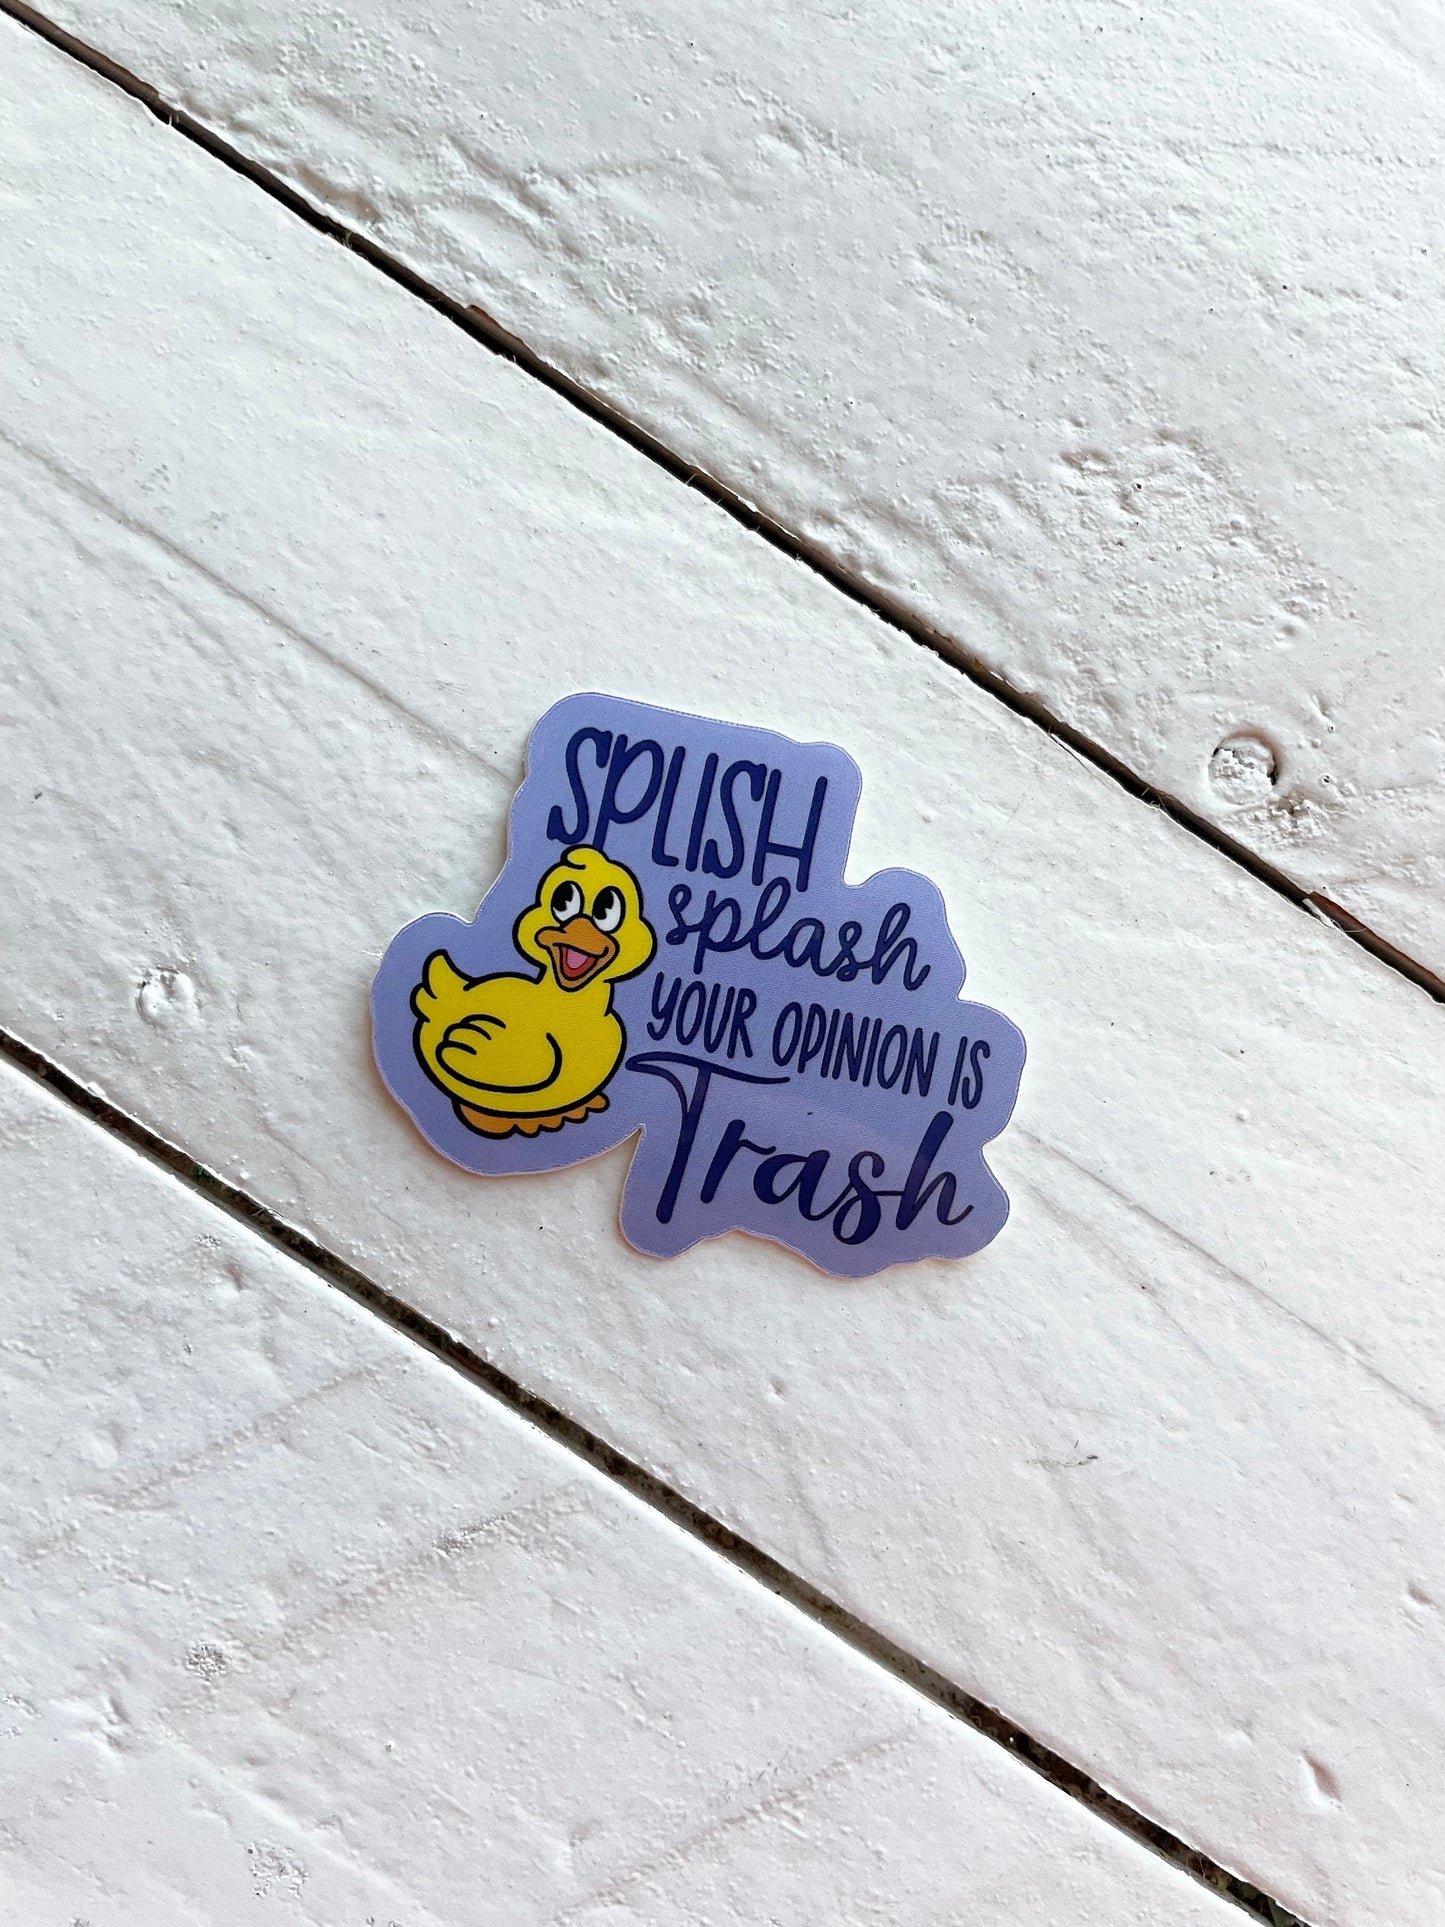 Splish Splash your opinion is trash, 2” Sticker